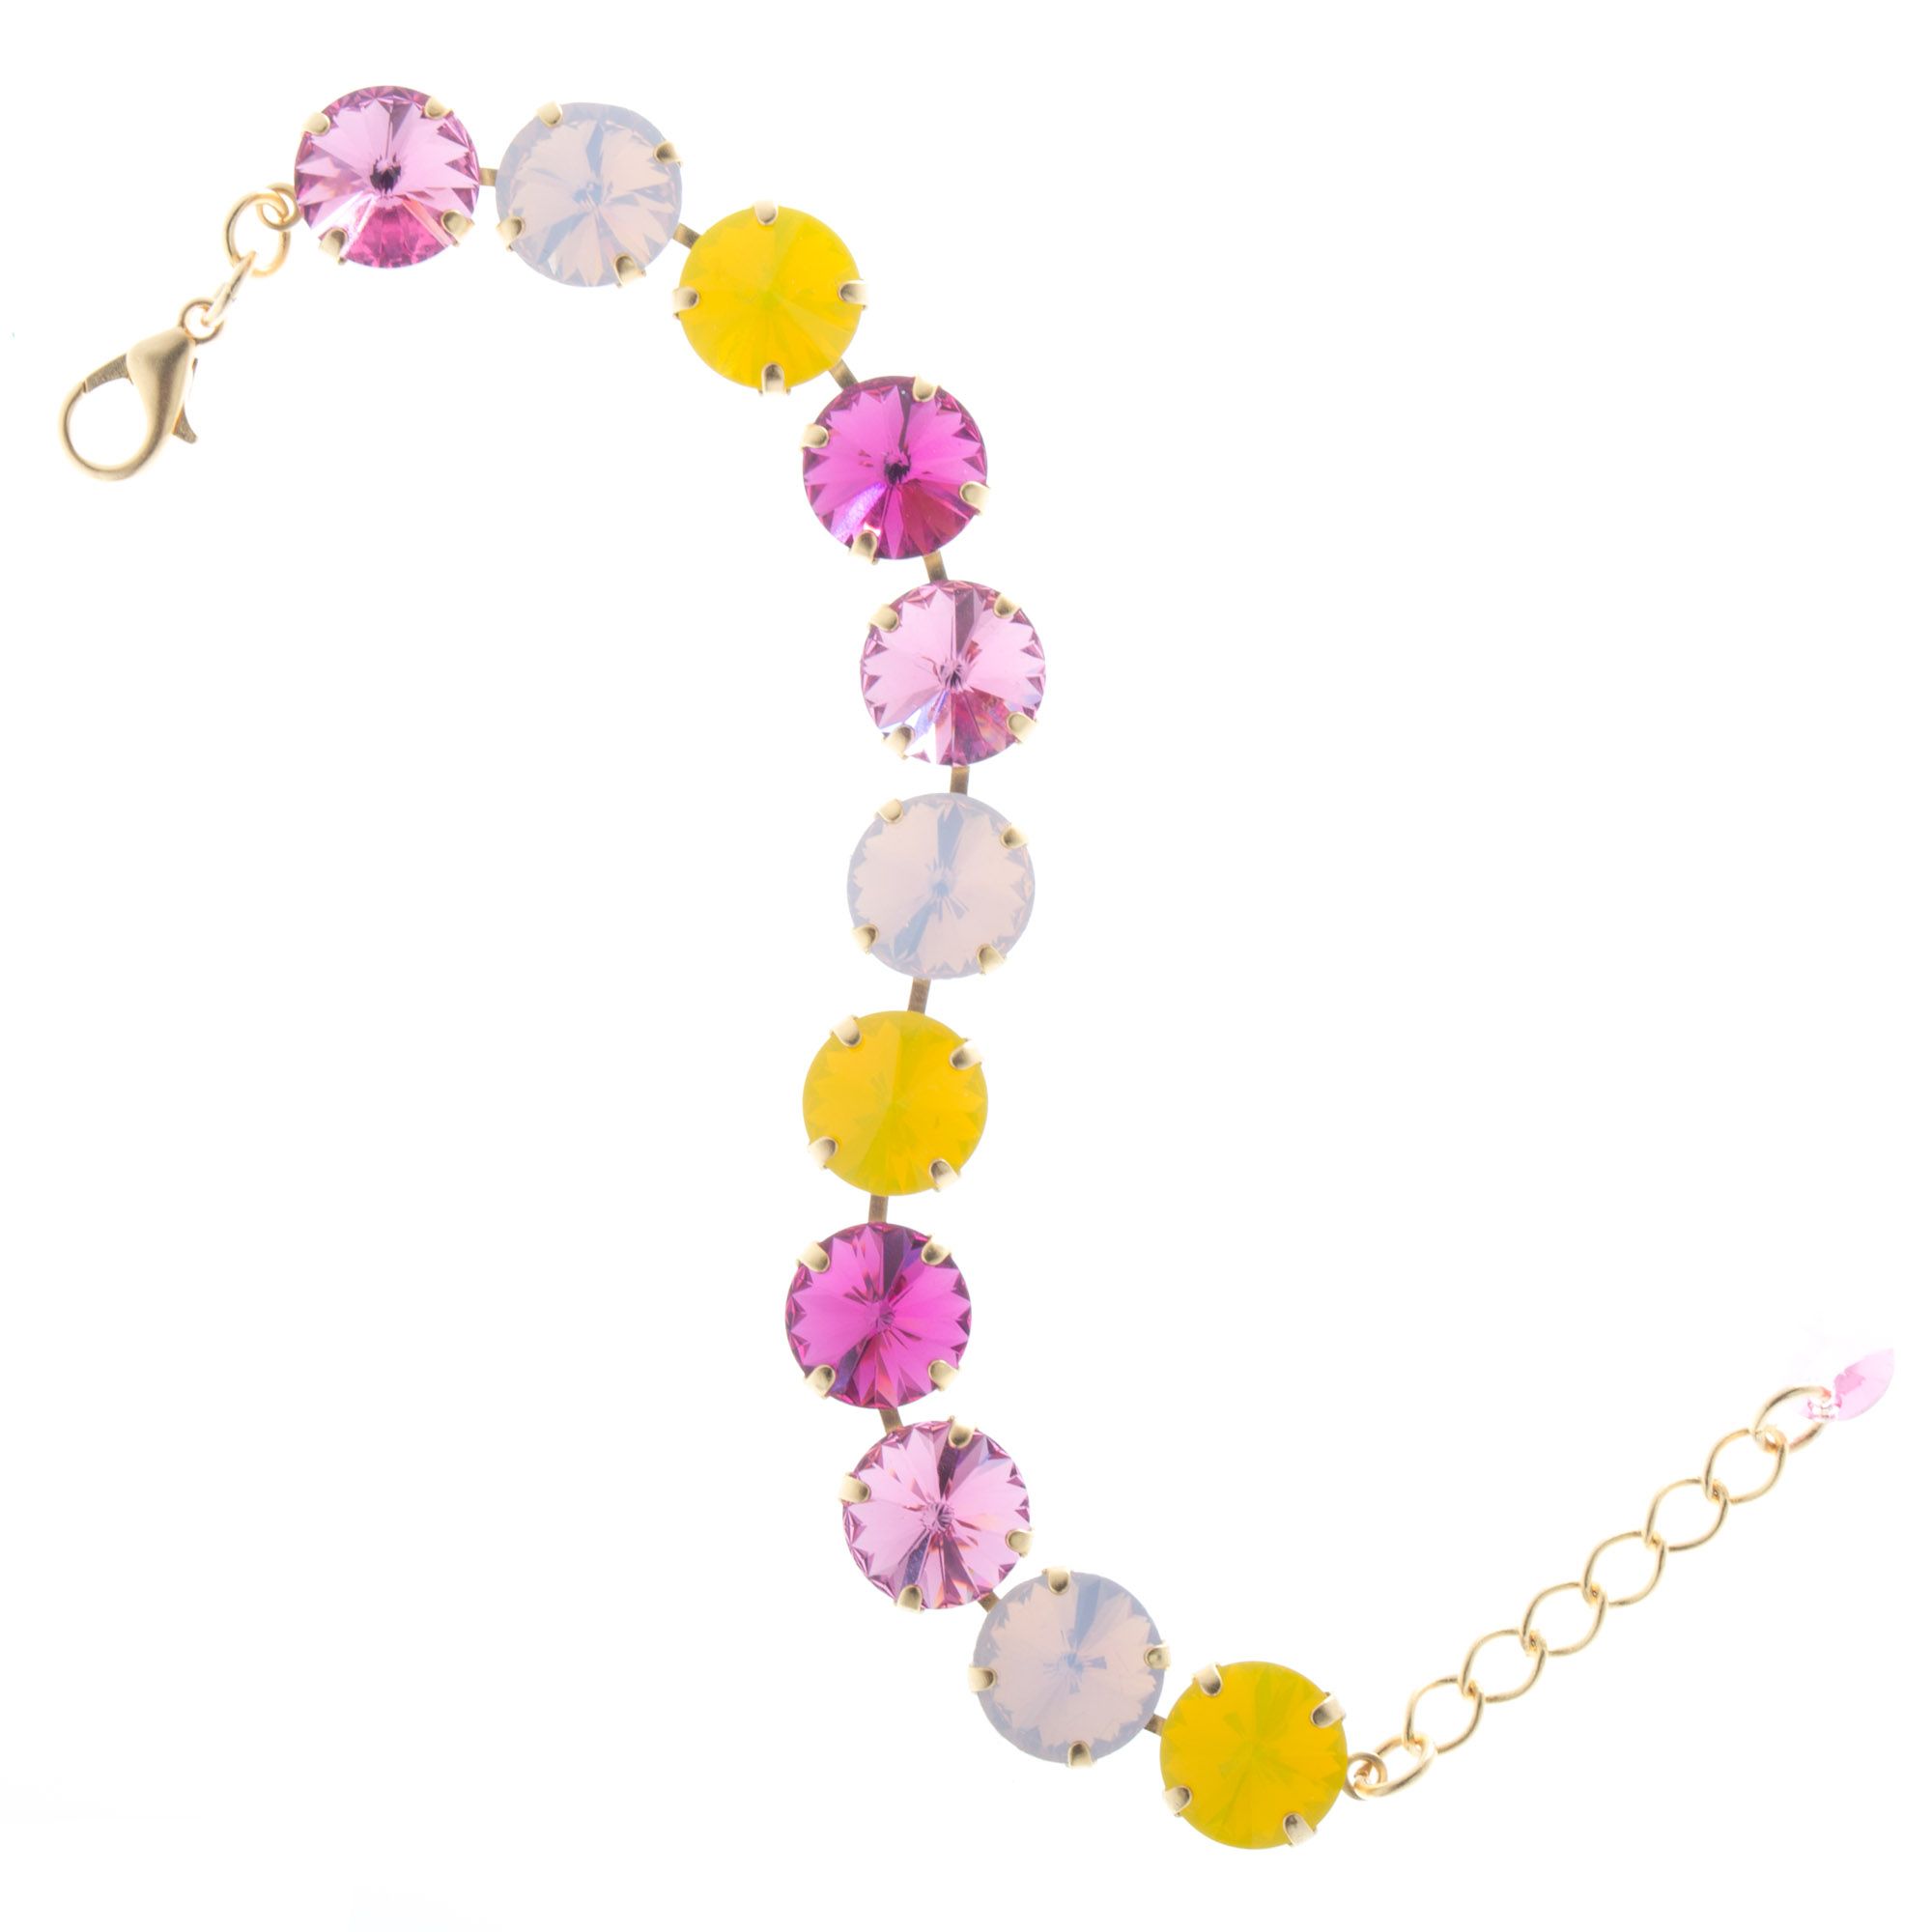 Pink Swarovski Crystal Bracelet Bracelet – Marie's Jewelry Store